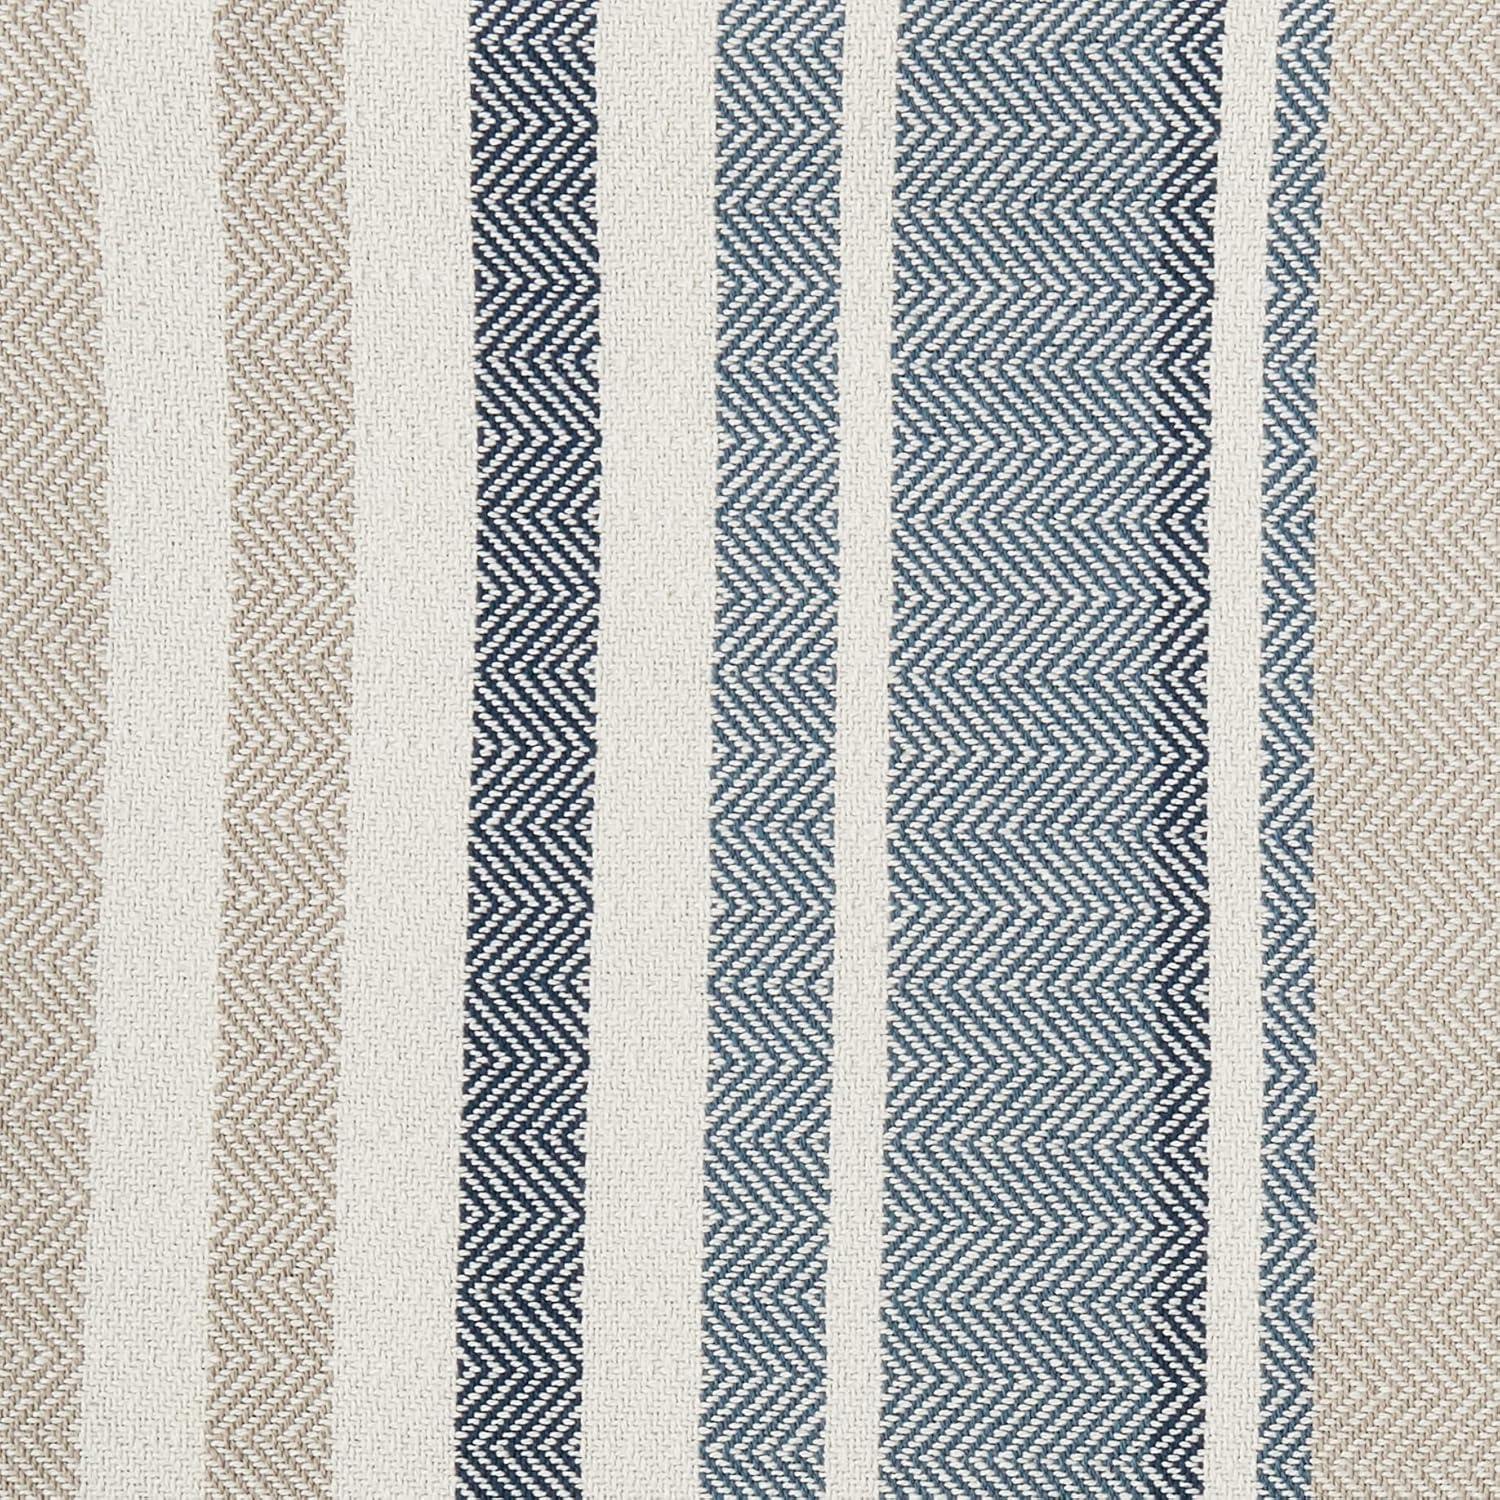 Herringbone Soft Touch Cotton Full-Size Blue Stripe Blanket